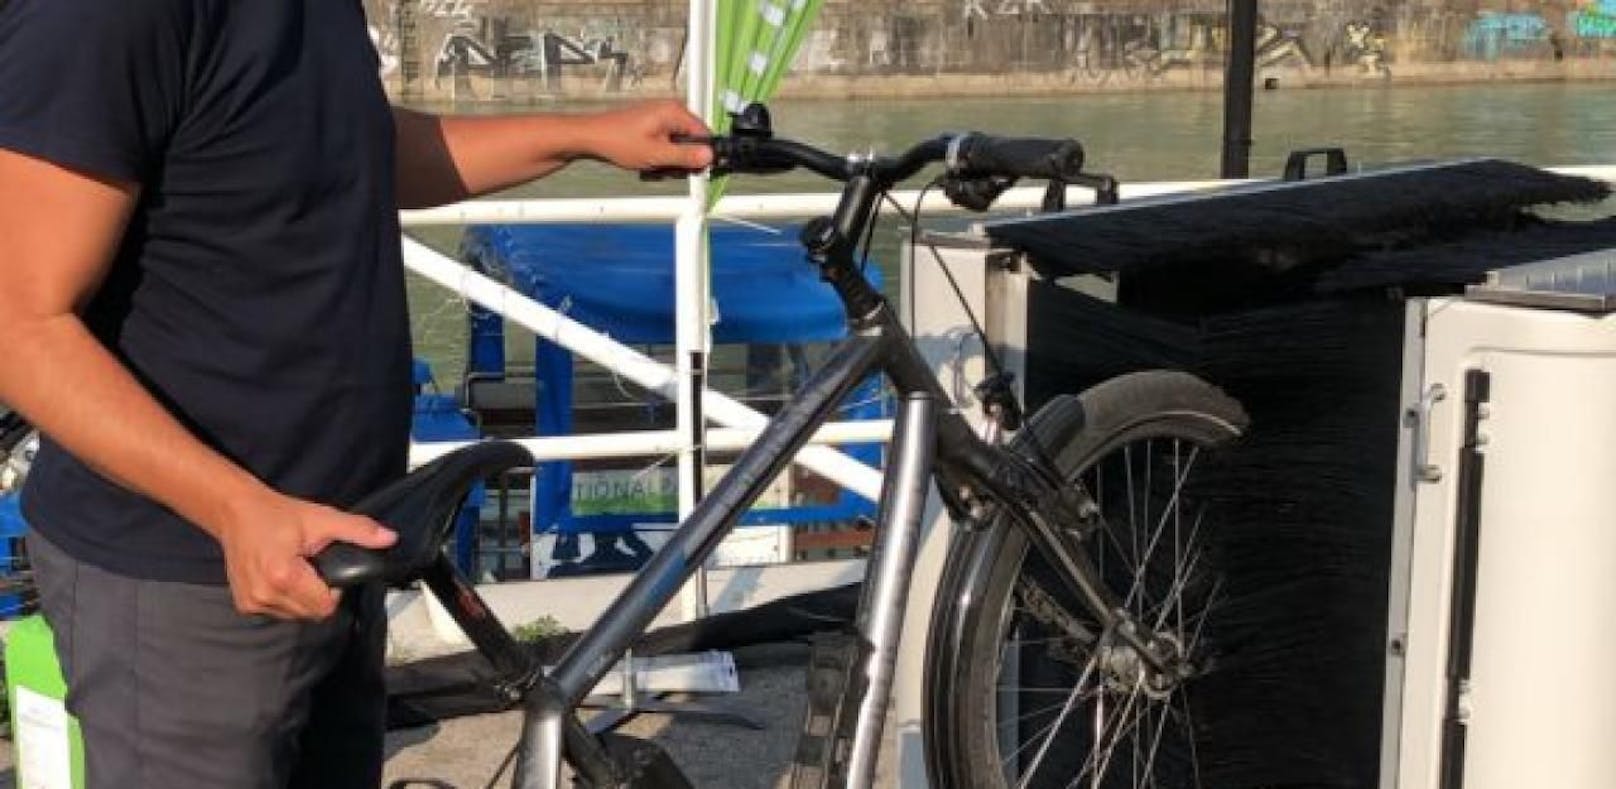 Gratis Fahrrad-Wäsche am Donaukanal